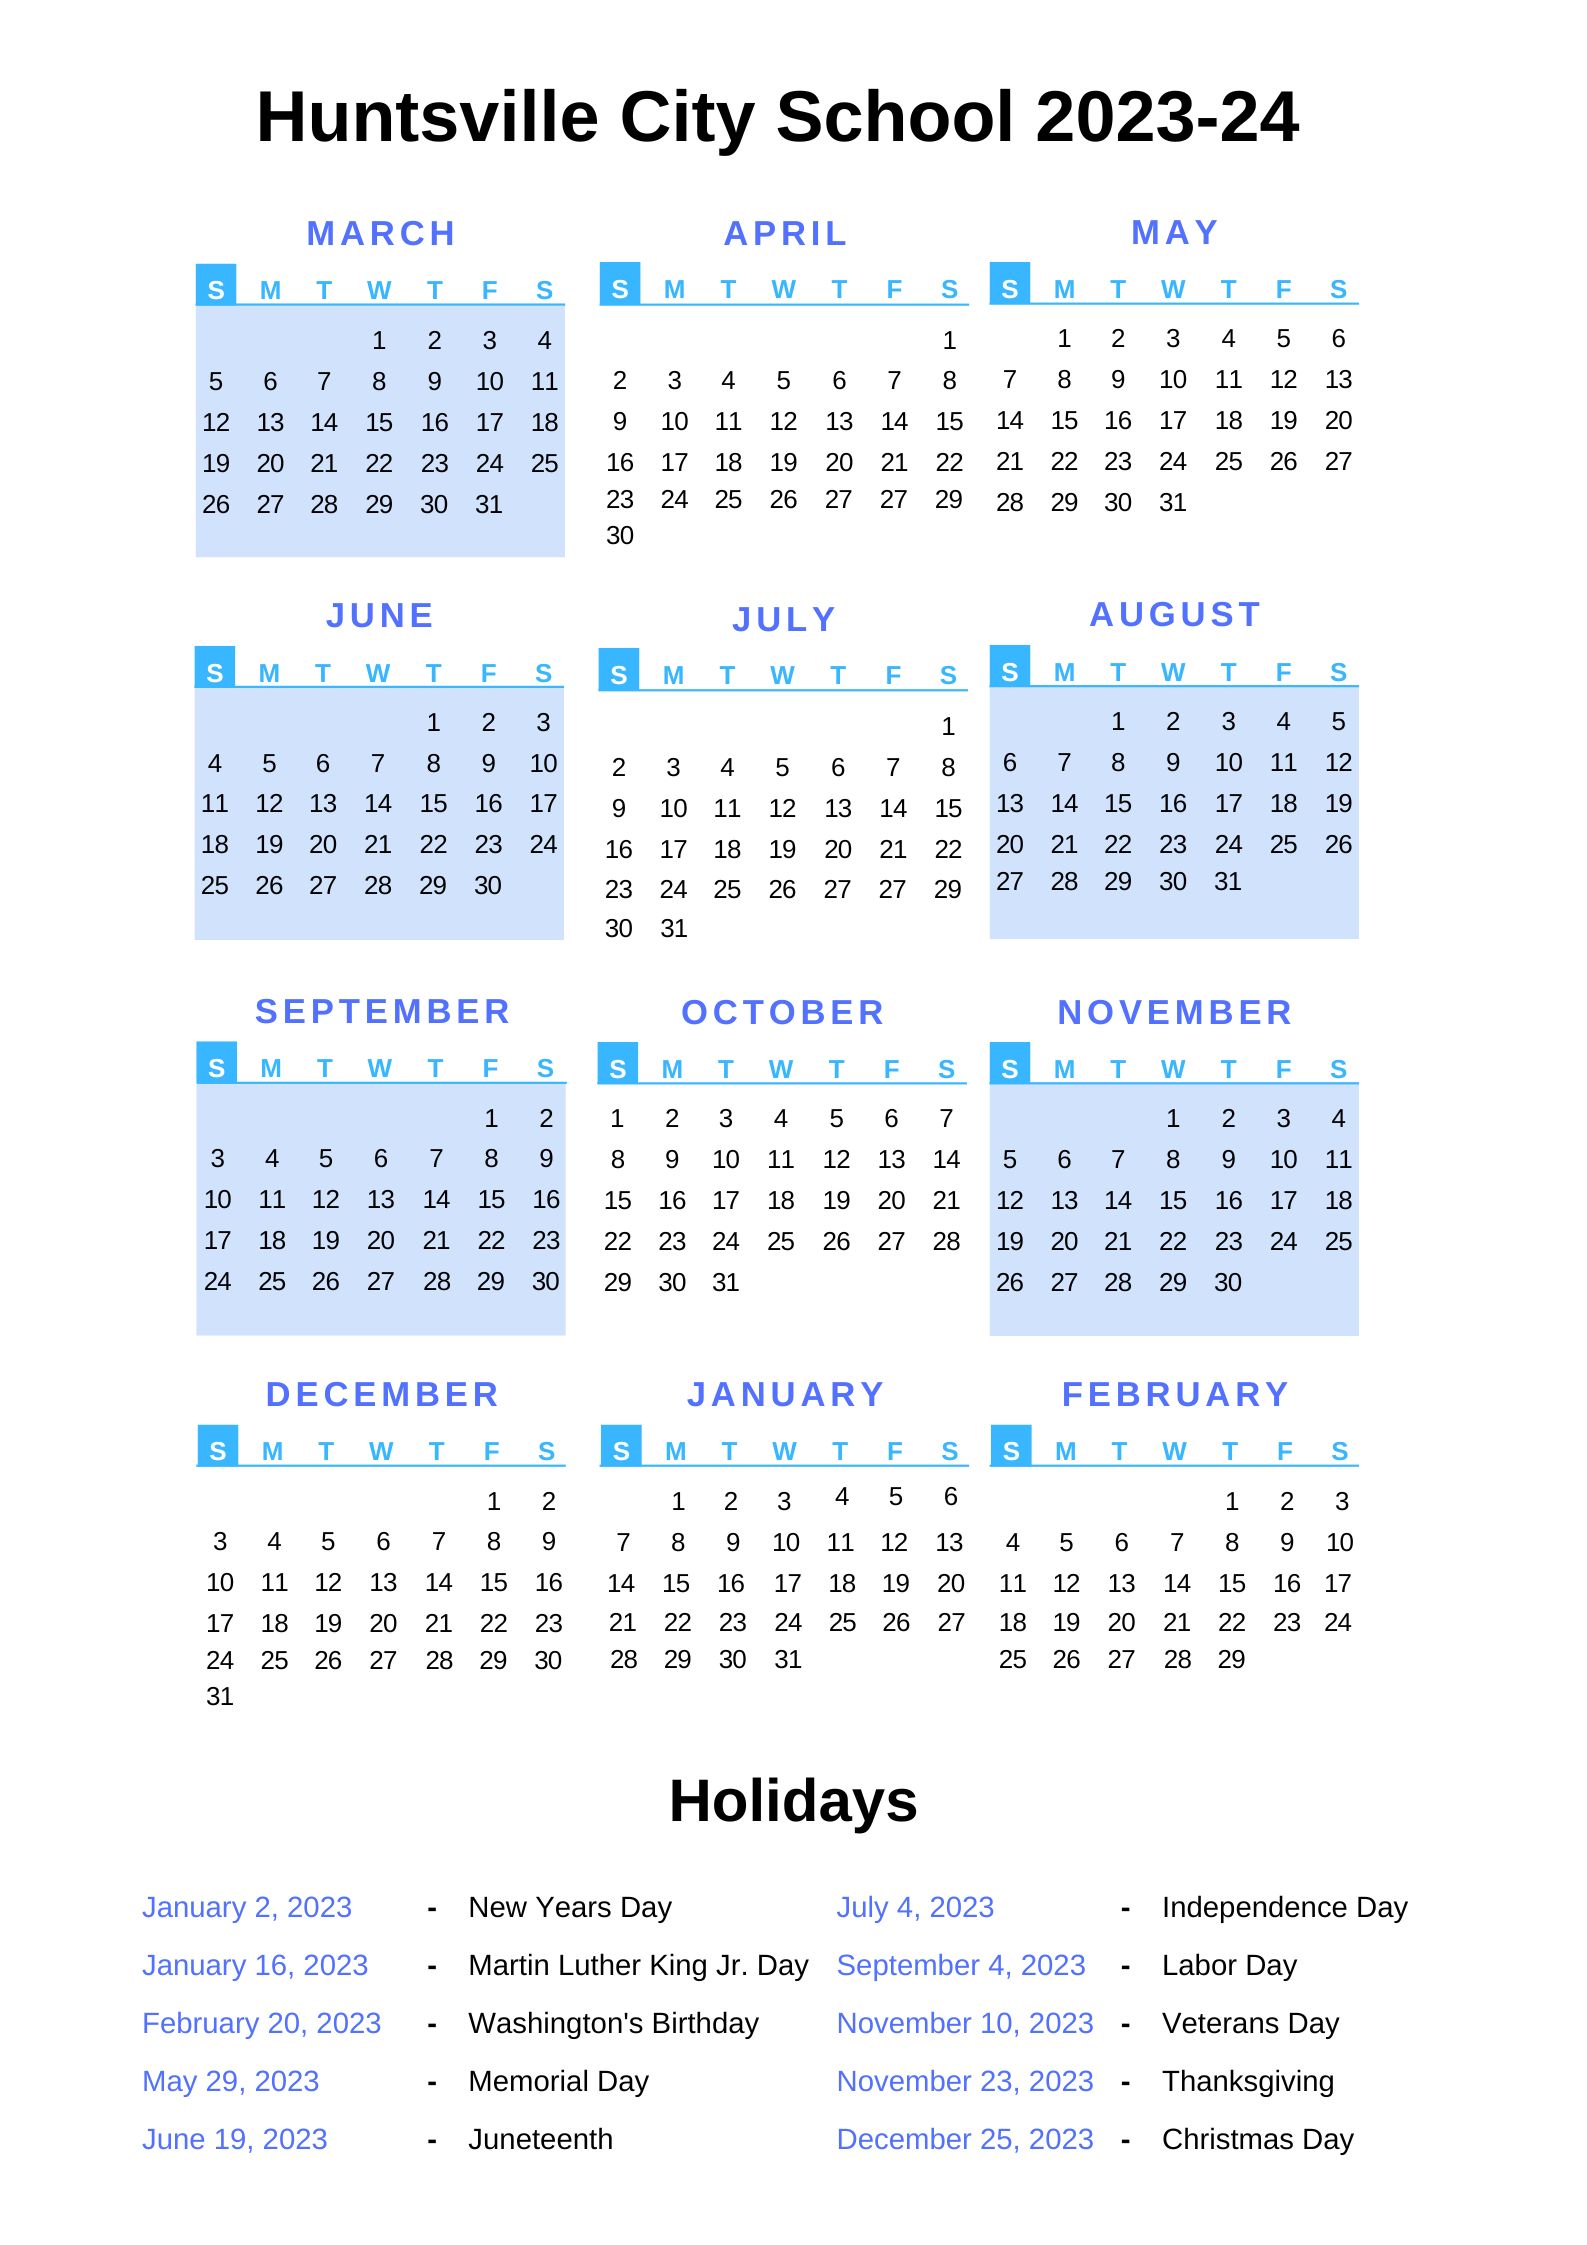 huntsville-city-schools-calendar-2023-24-with-holidays